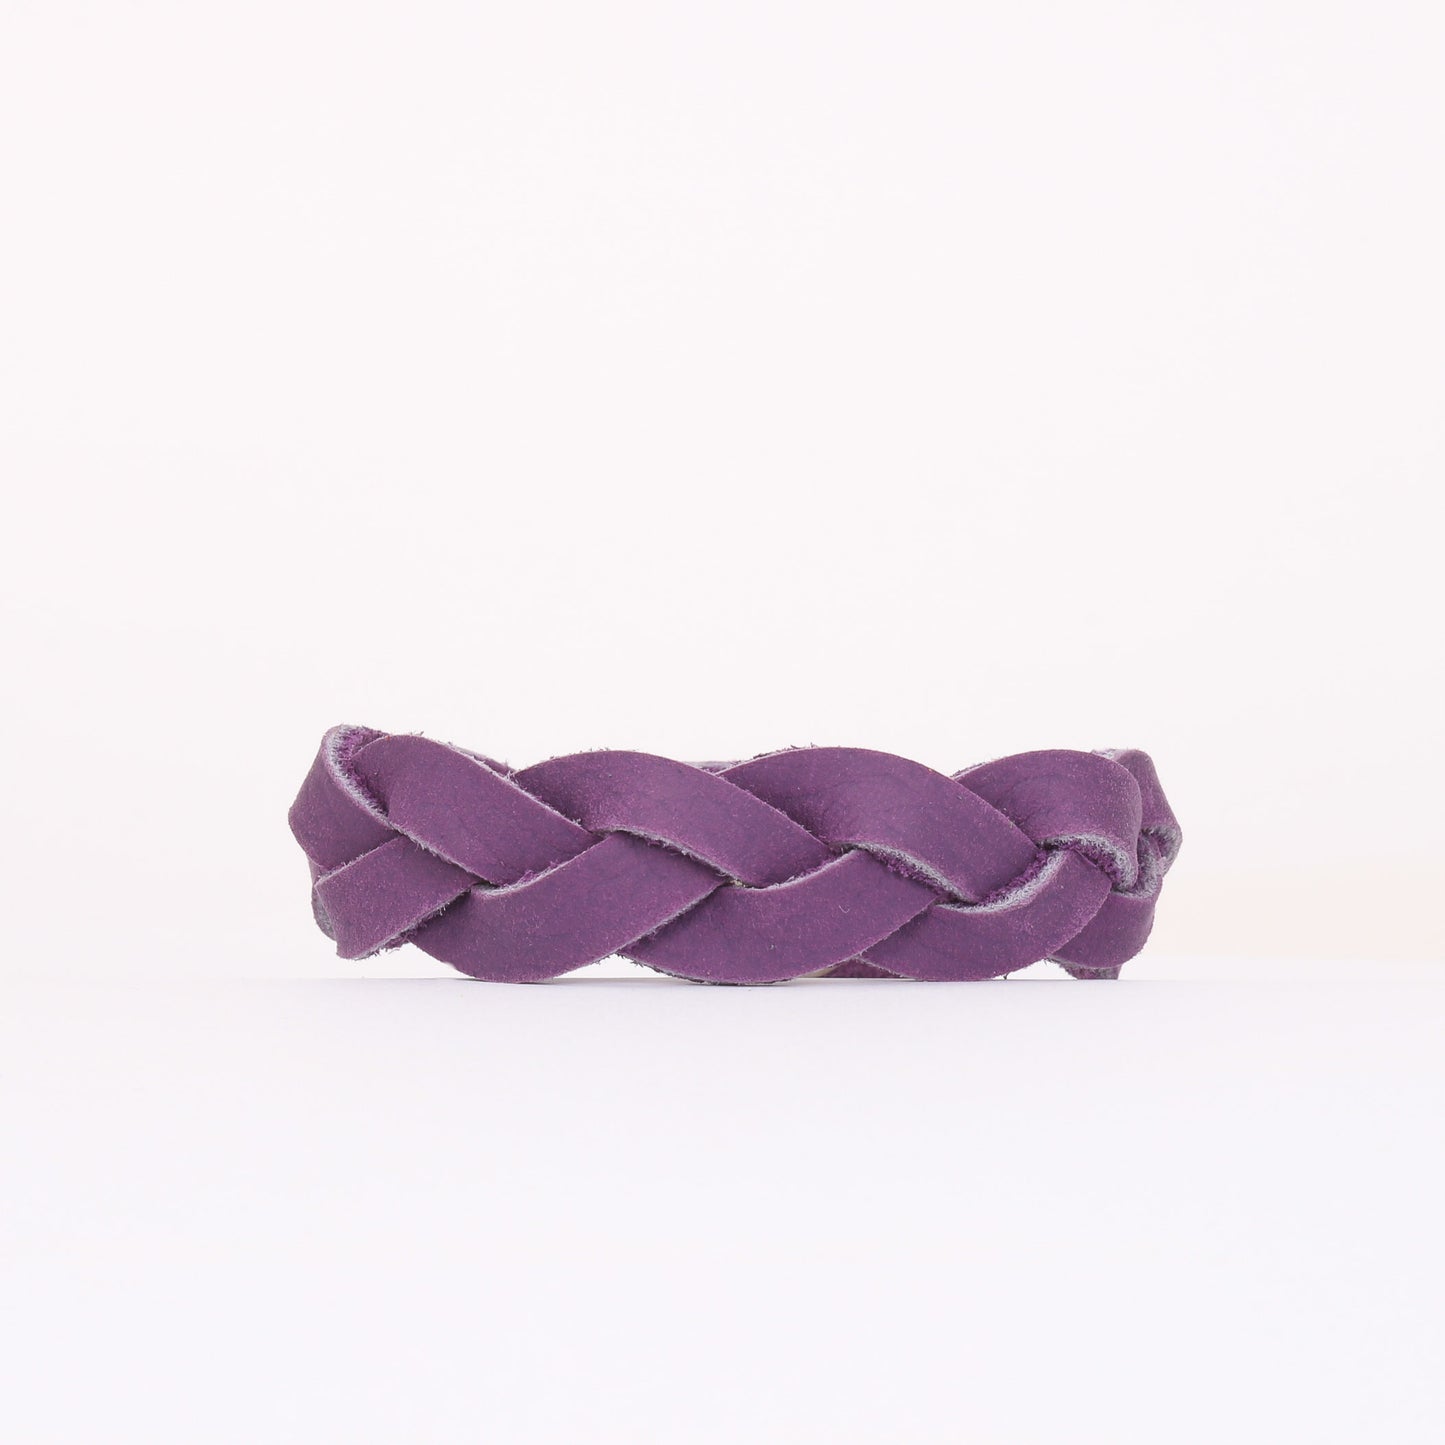 Infinite braid bracelets